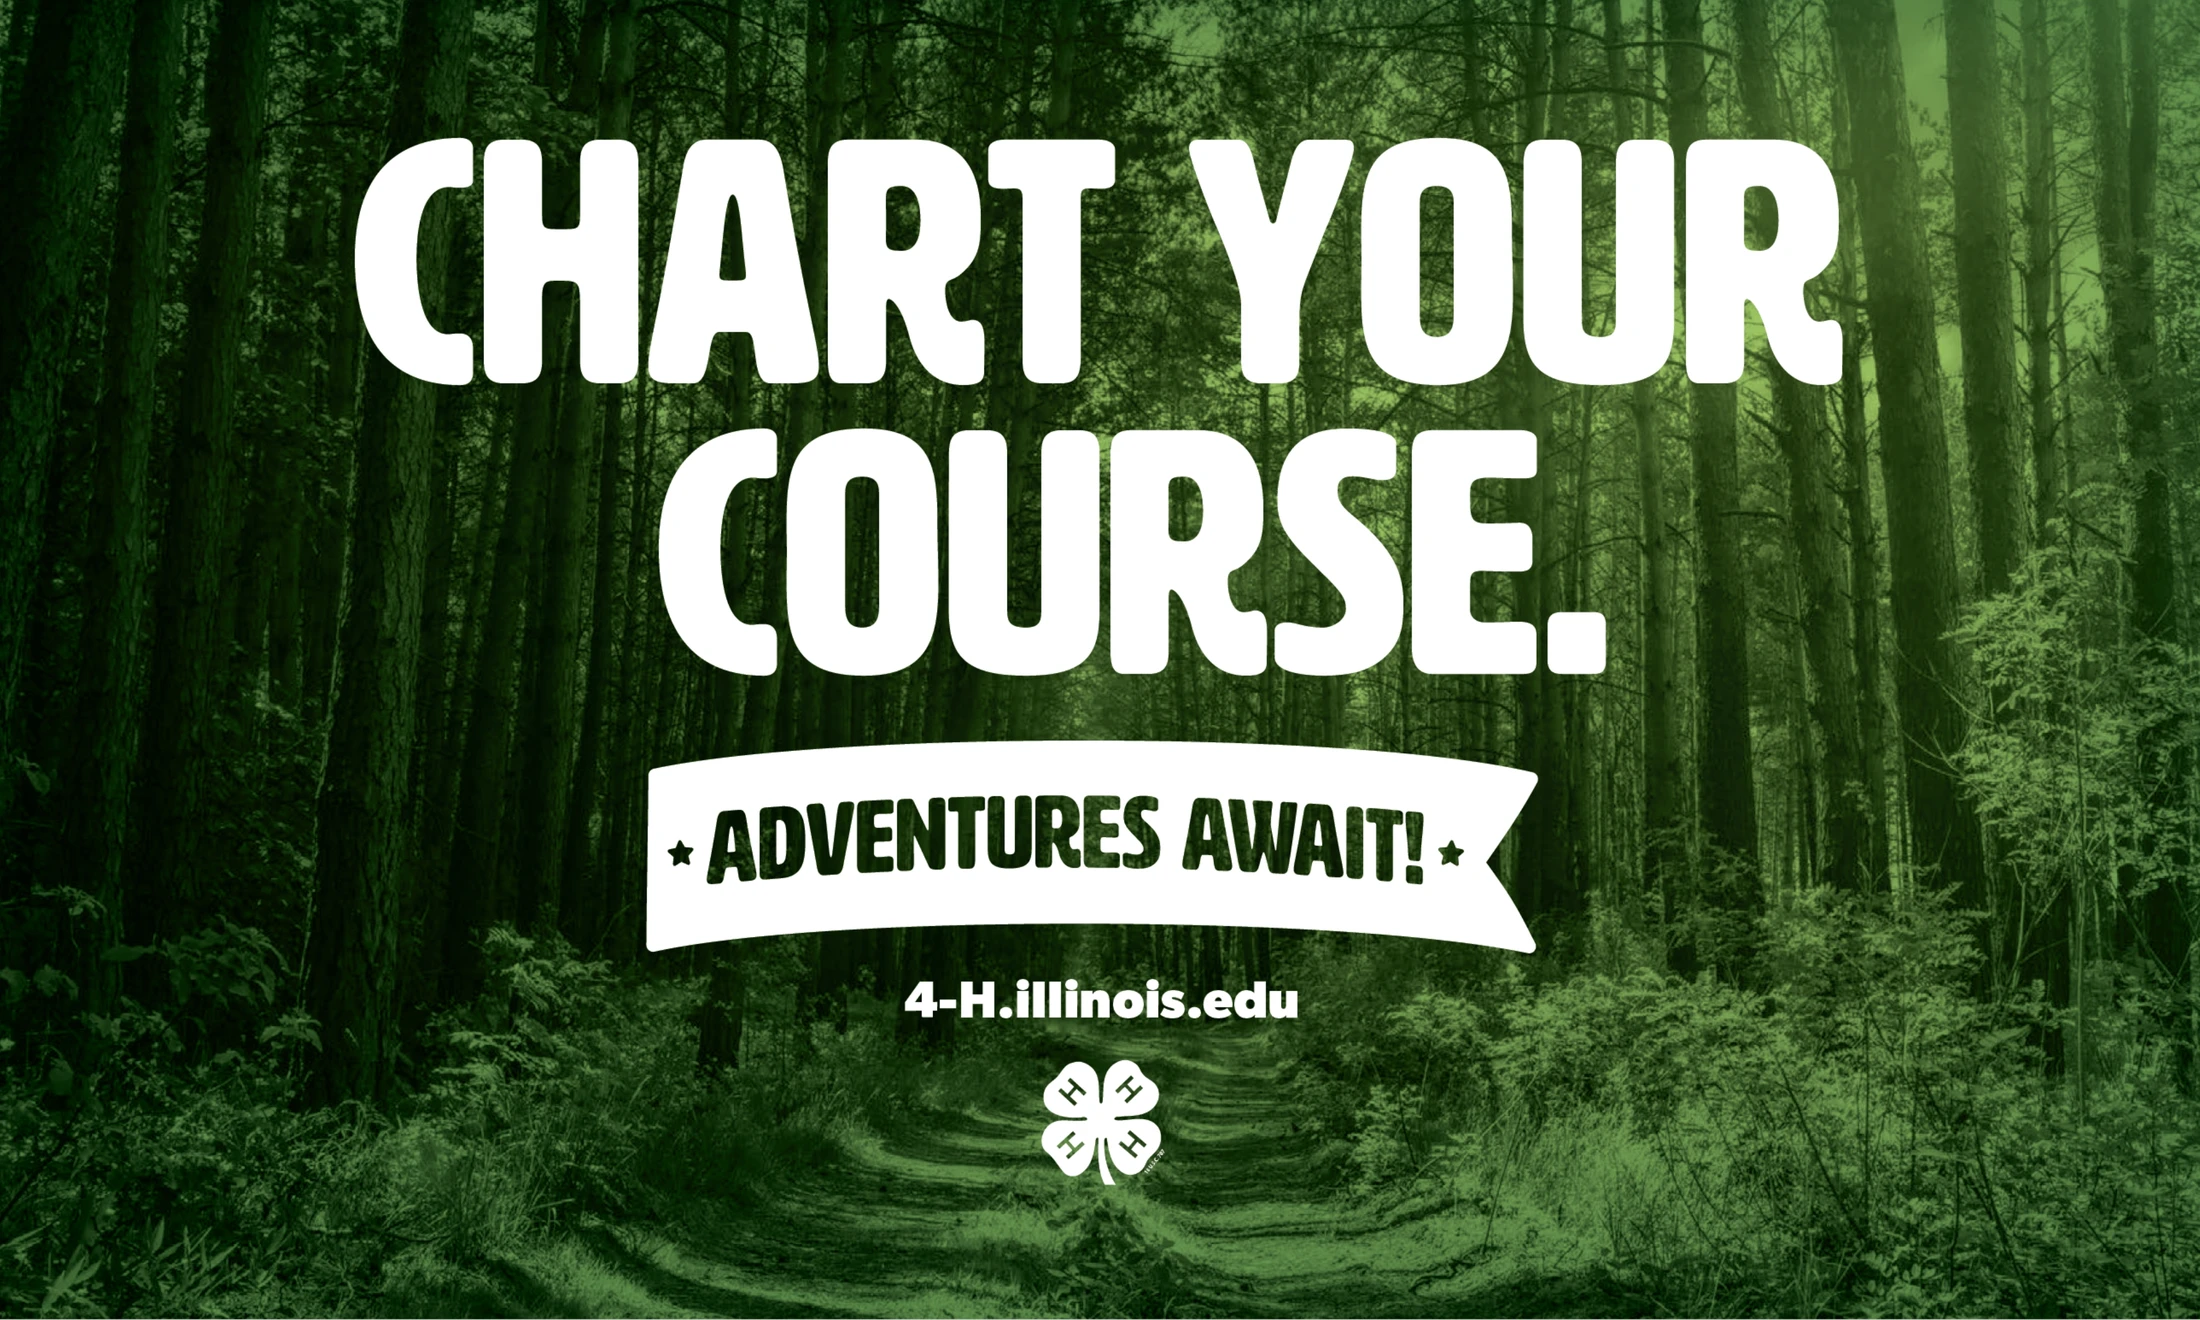 Chart your course adventures await.